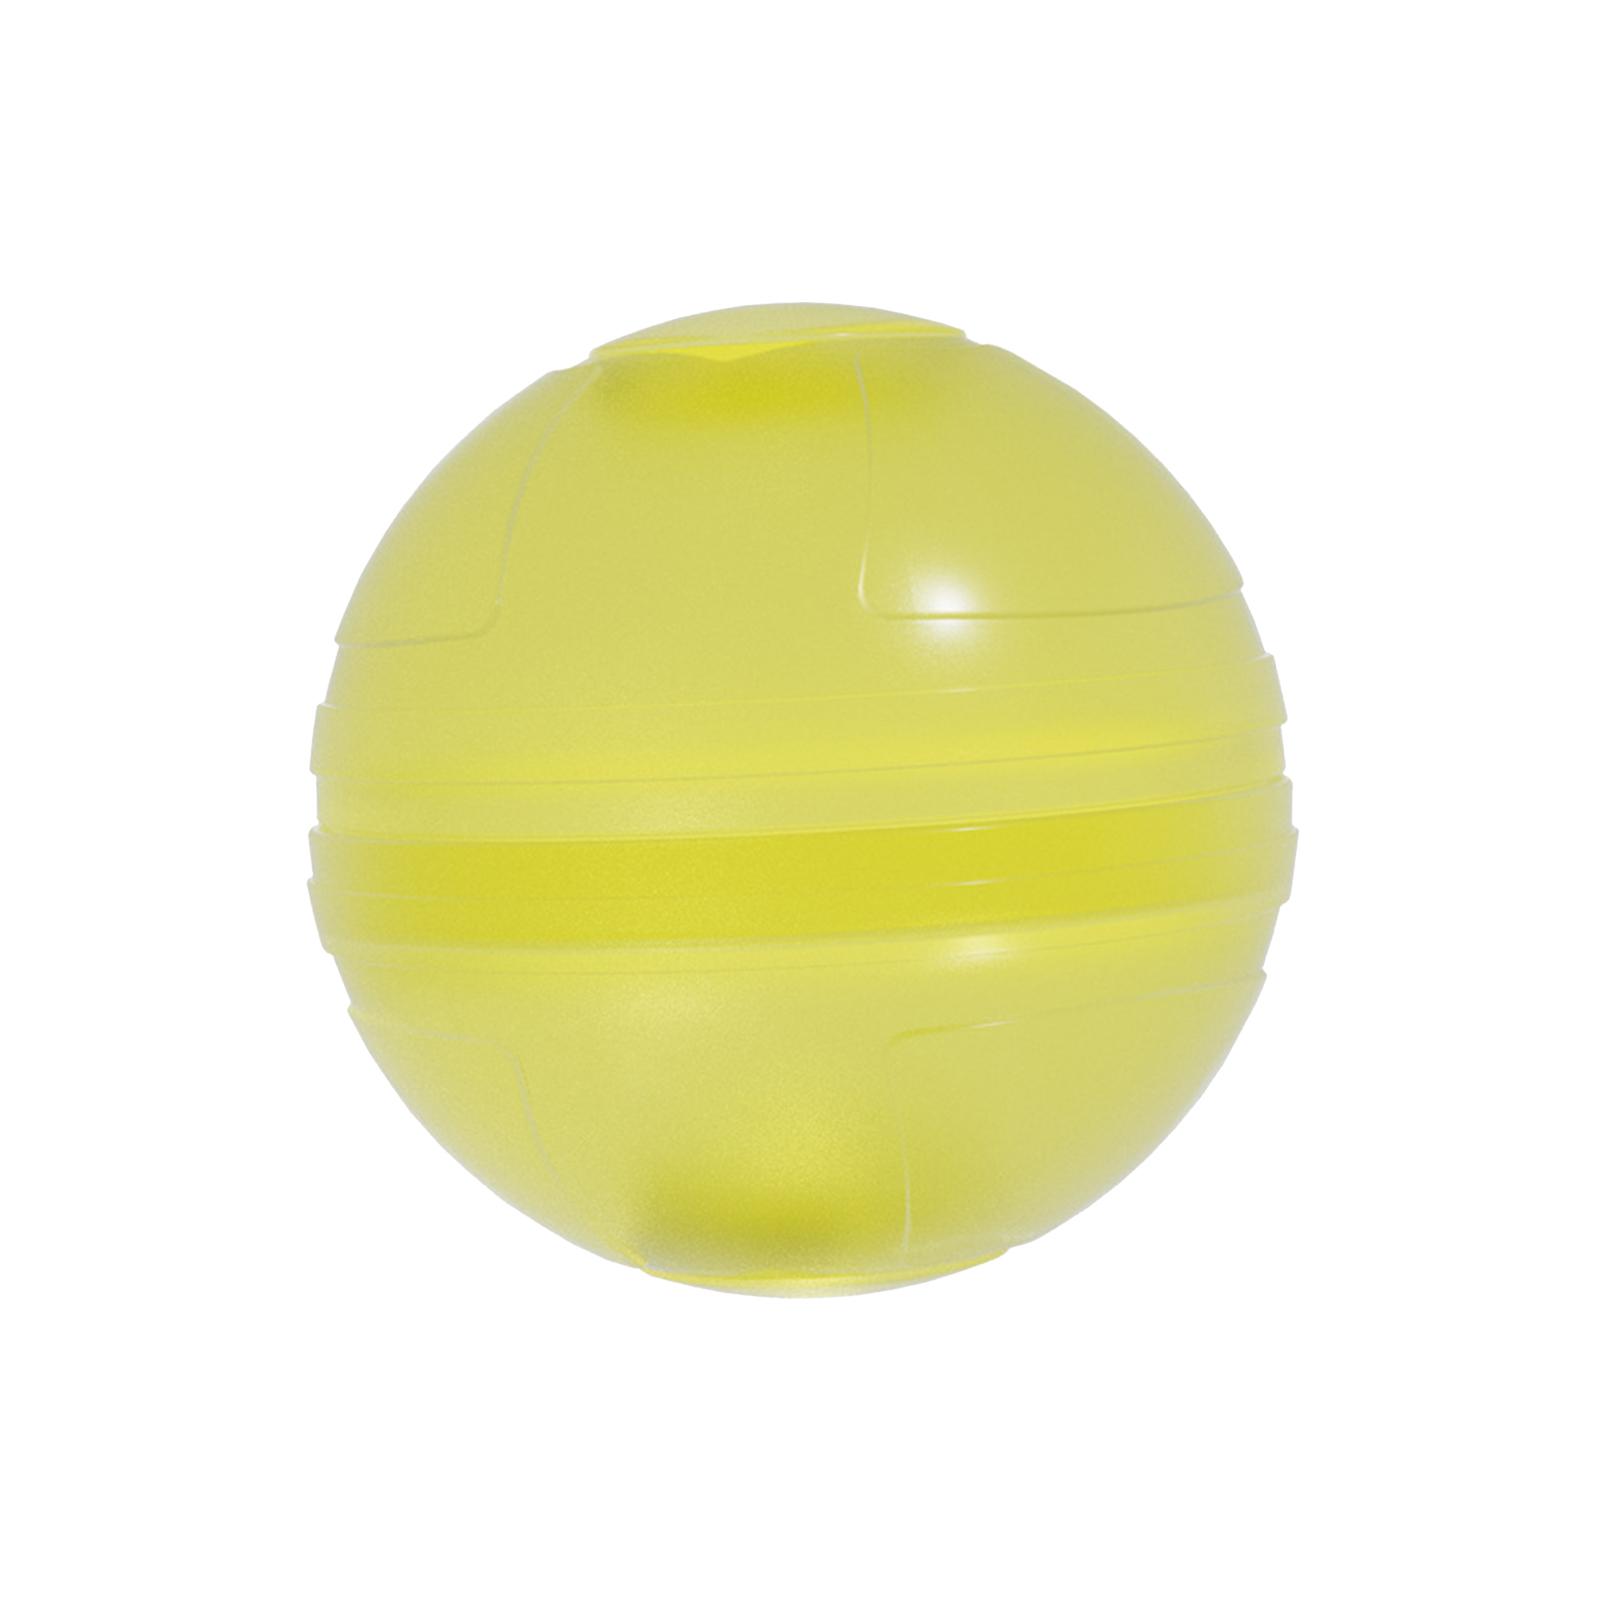 Reusable Water Balloons Refillable Water Outdoor Water Toys for Families Fun Regular Yellow